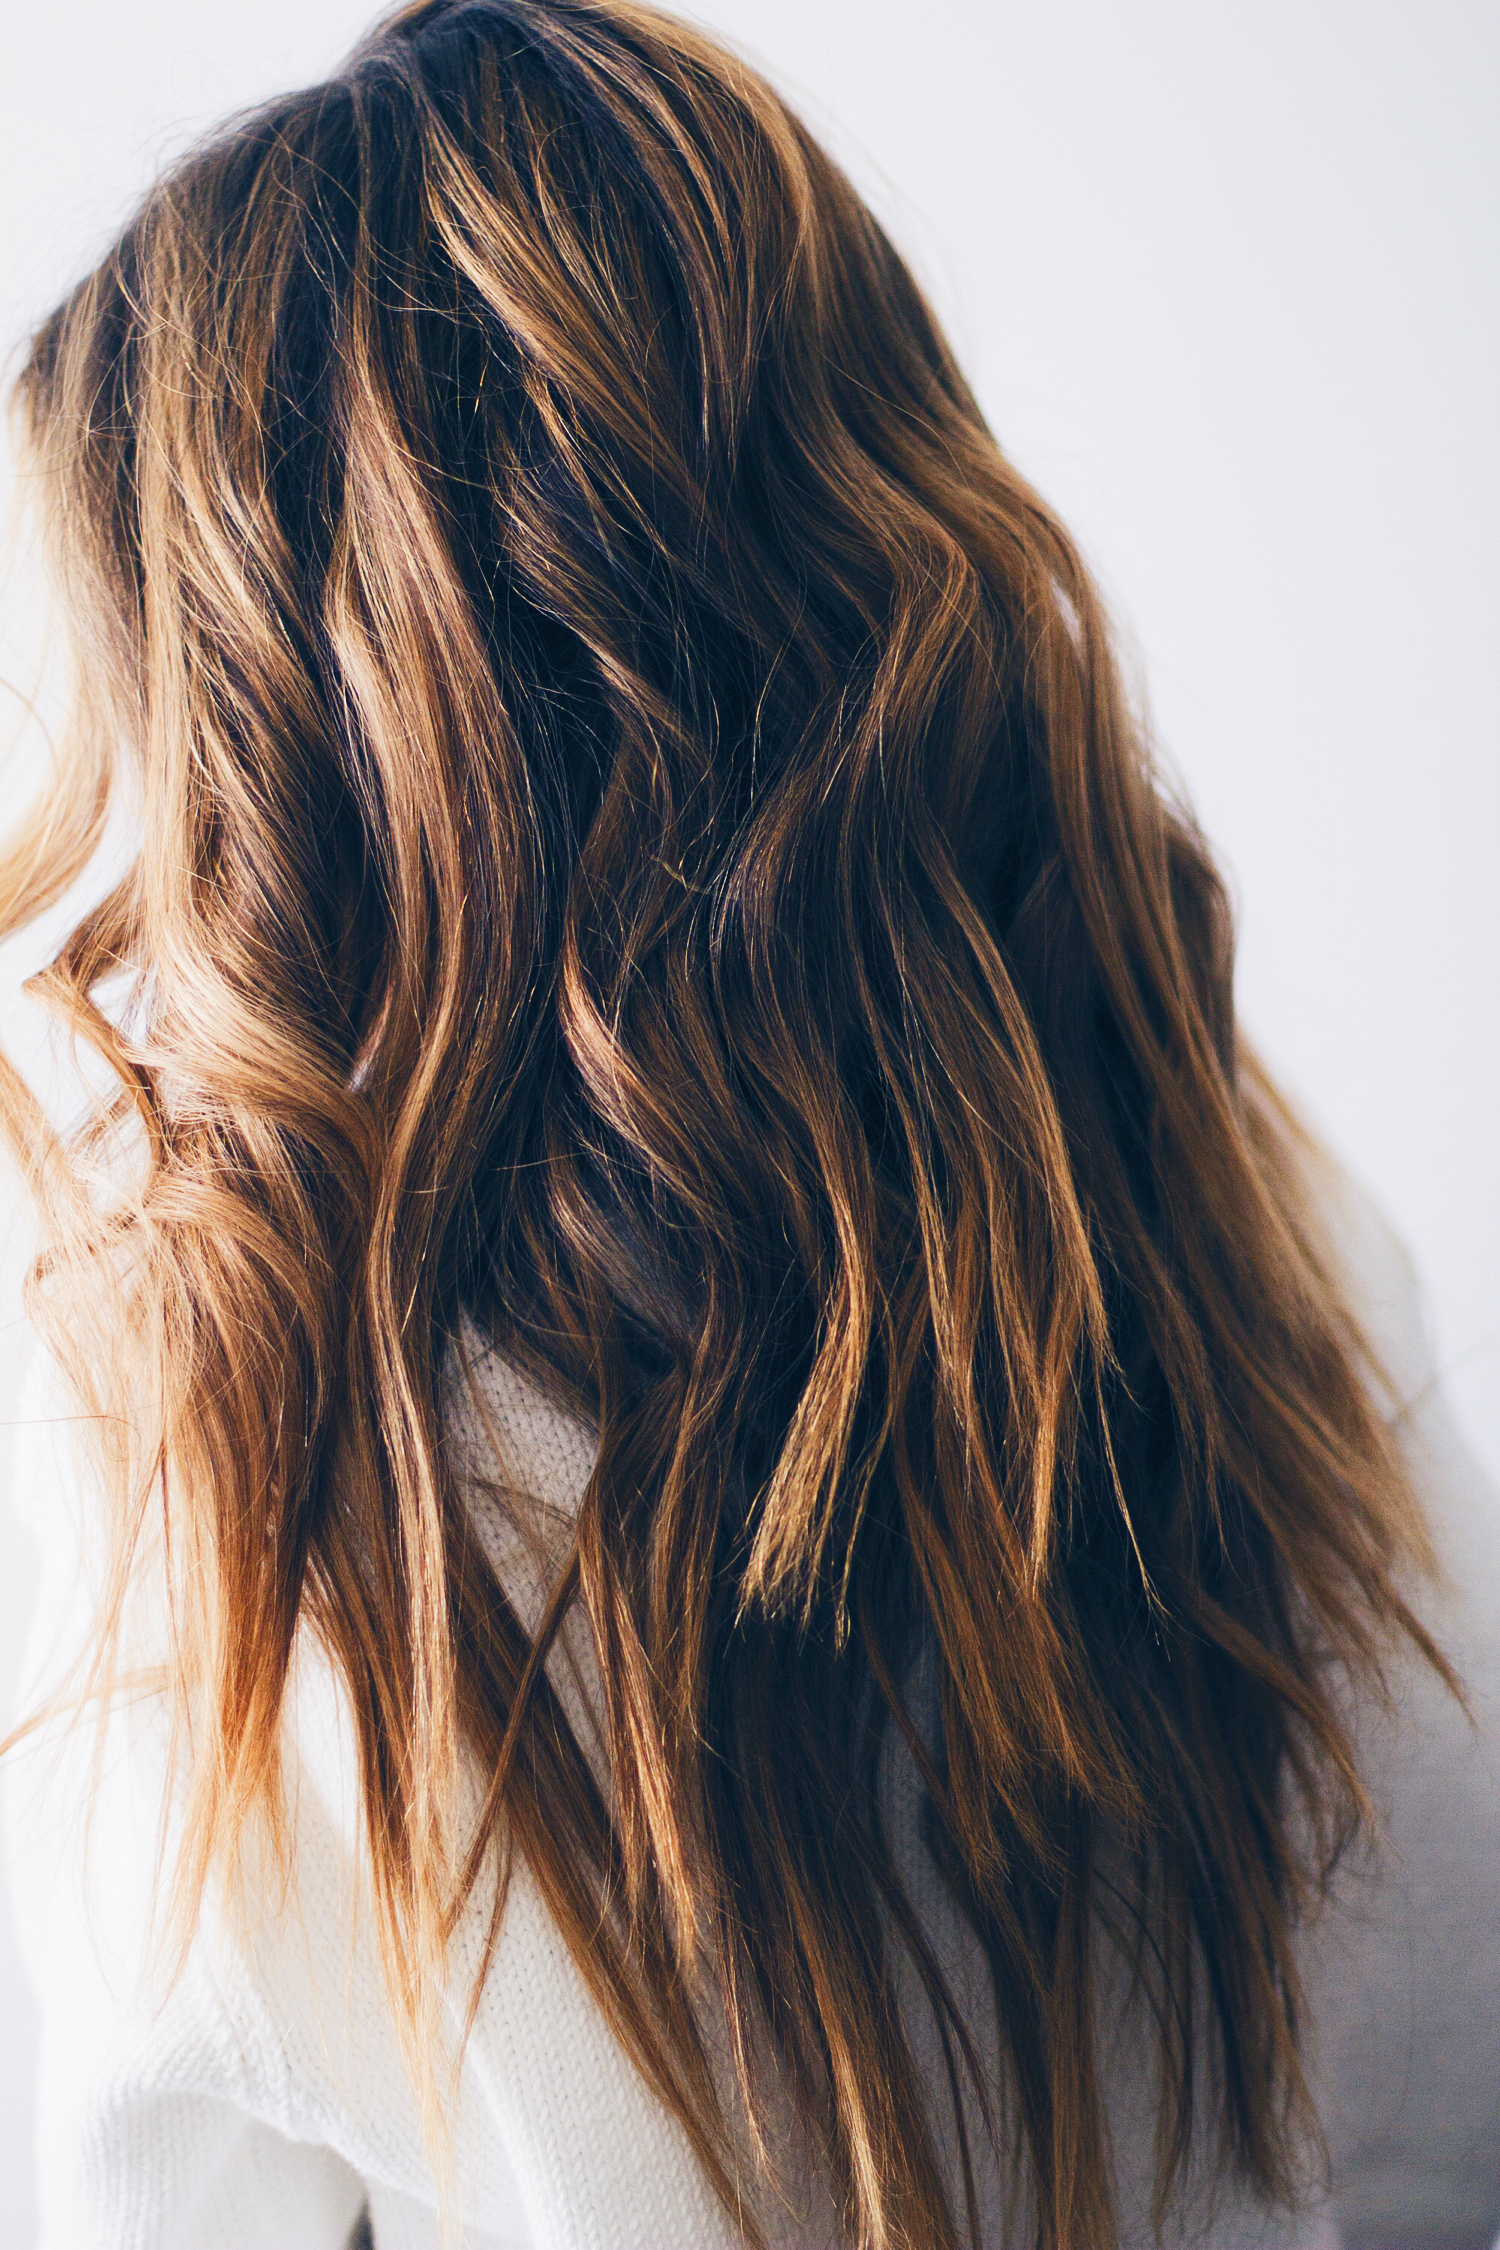 BEACHY WAVES HAIR TUTORIAL - Lindsay Marcella